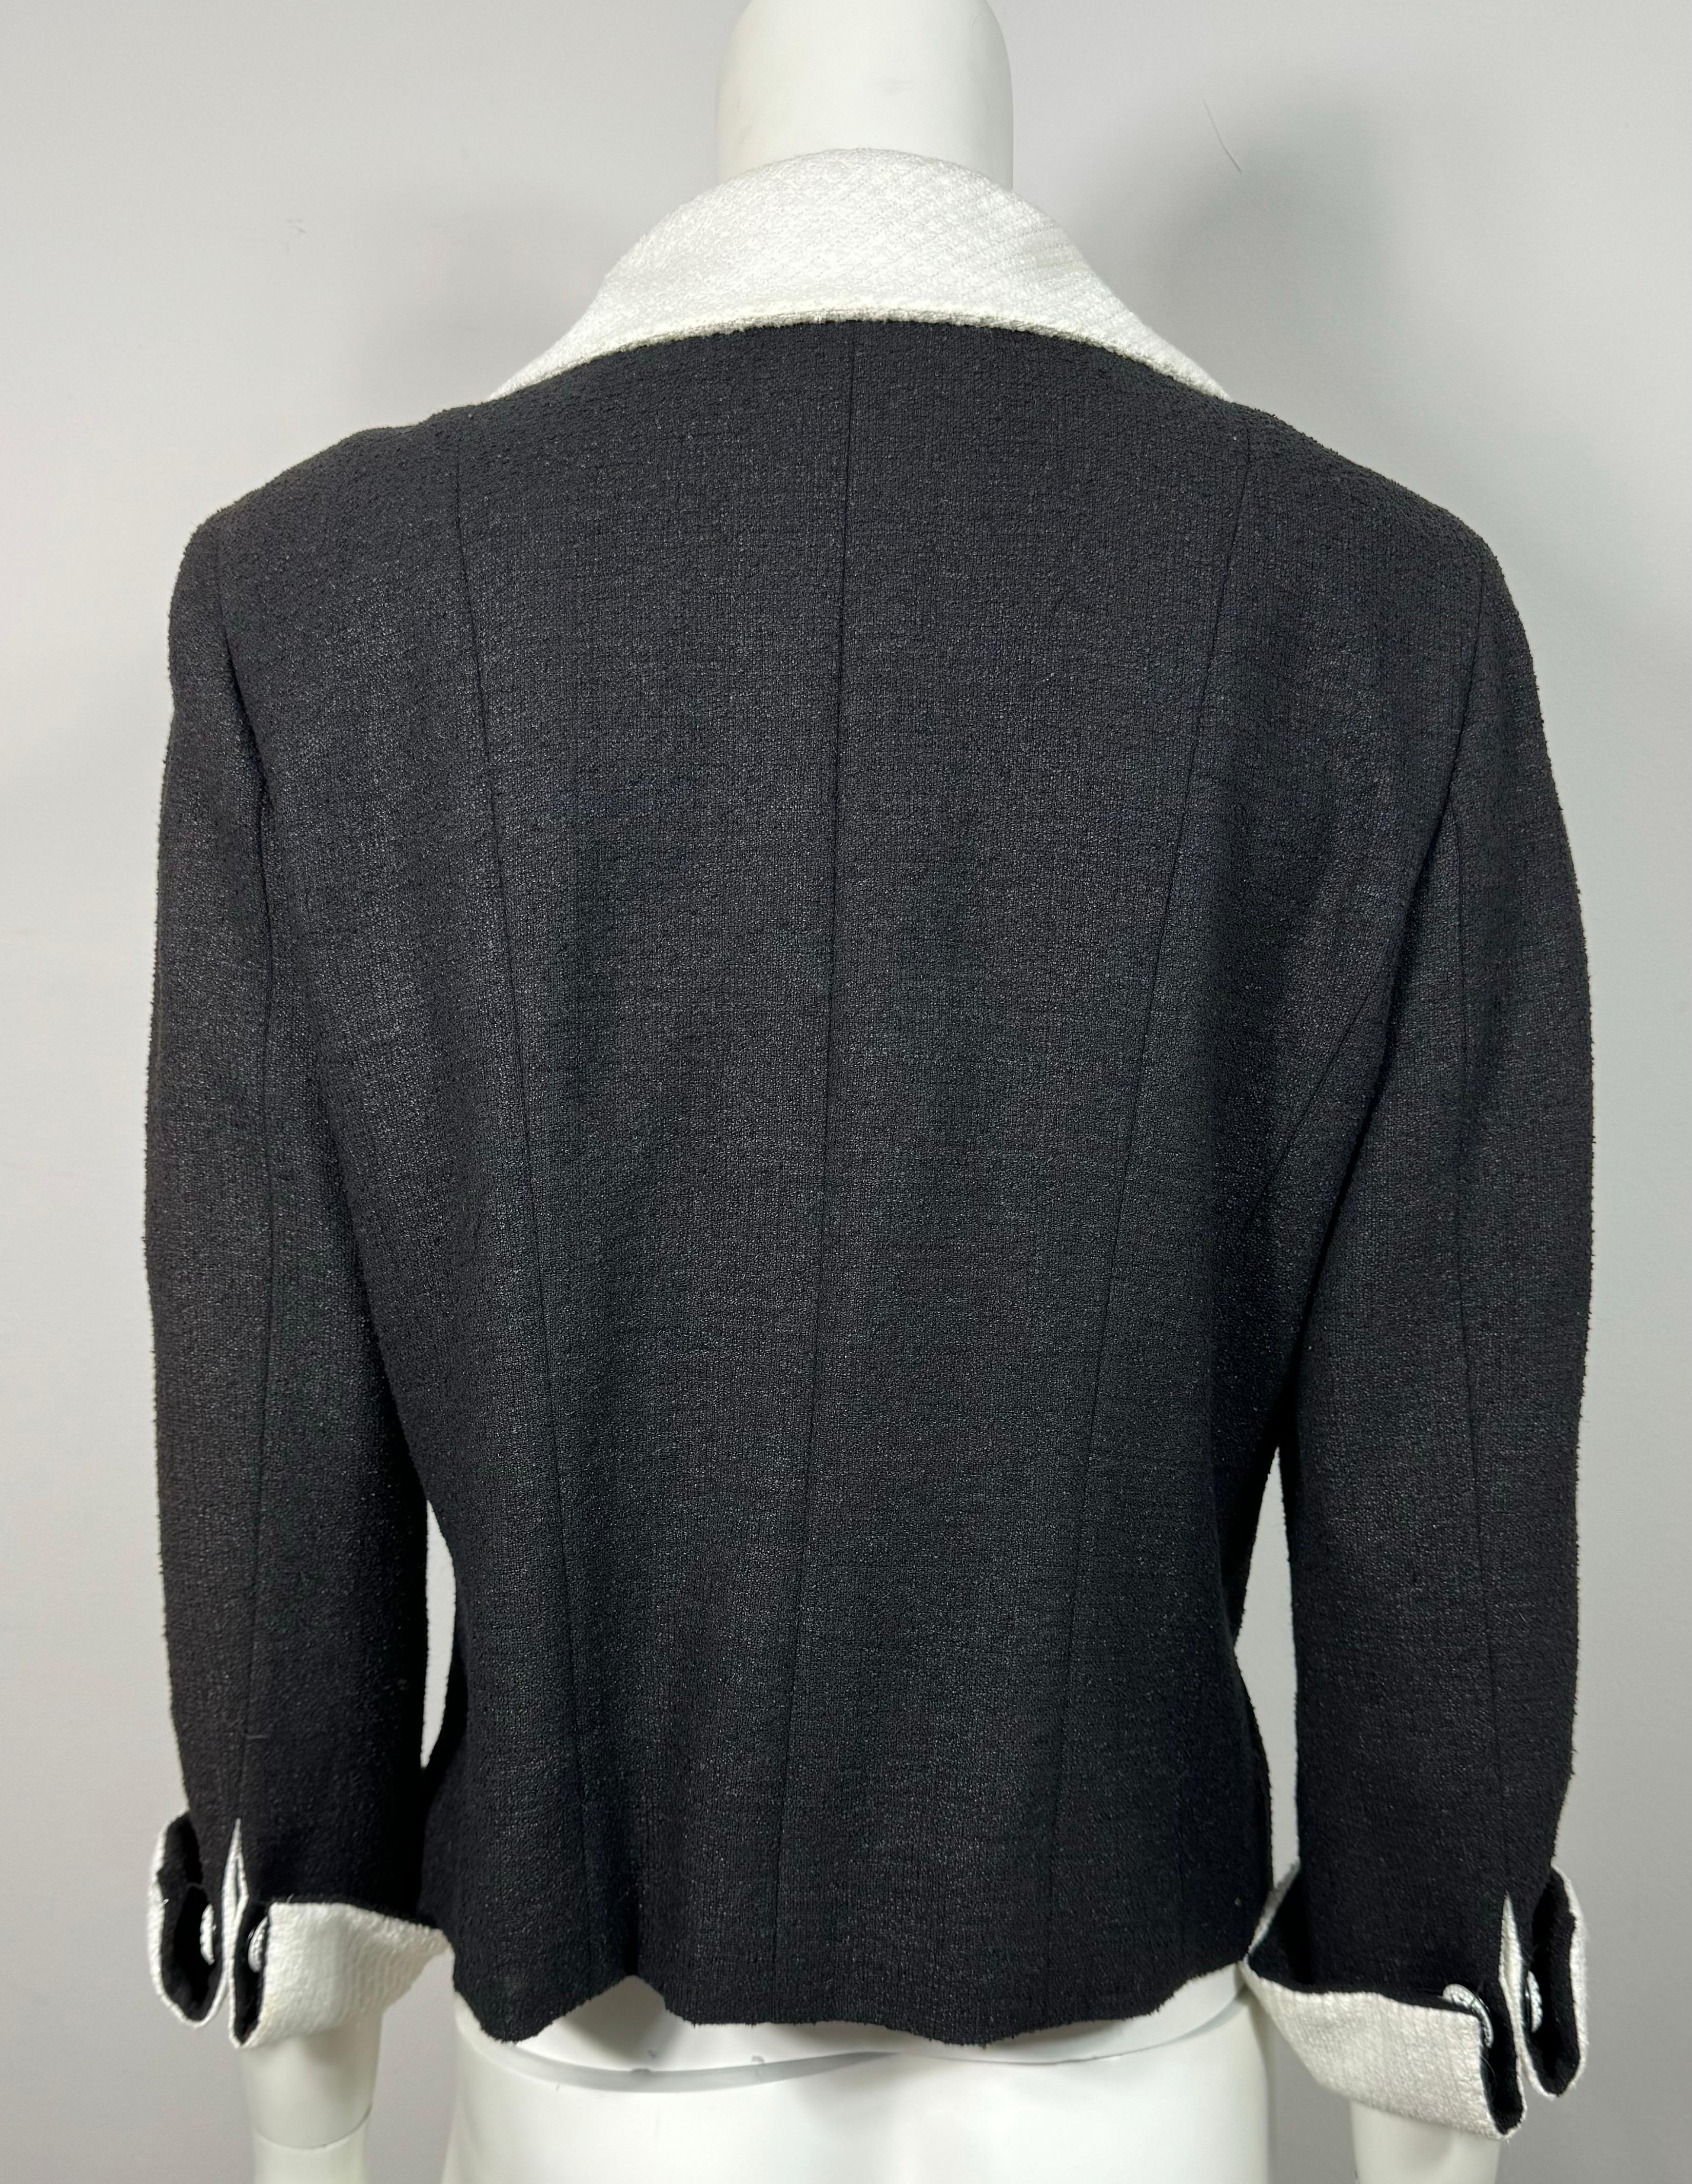 Chanel Runway Spring 2009 Black Linen Blend Jacket w/ White Collar/Cuff - 42 For Sale 6